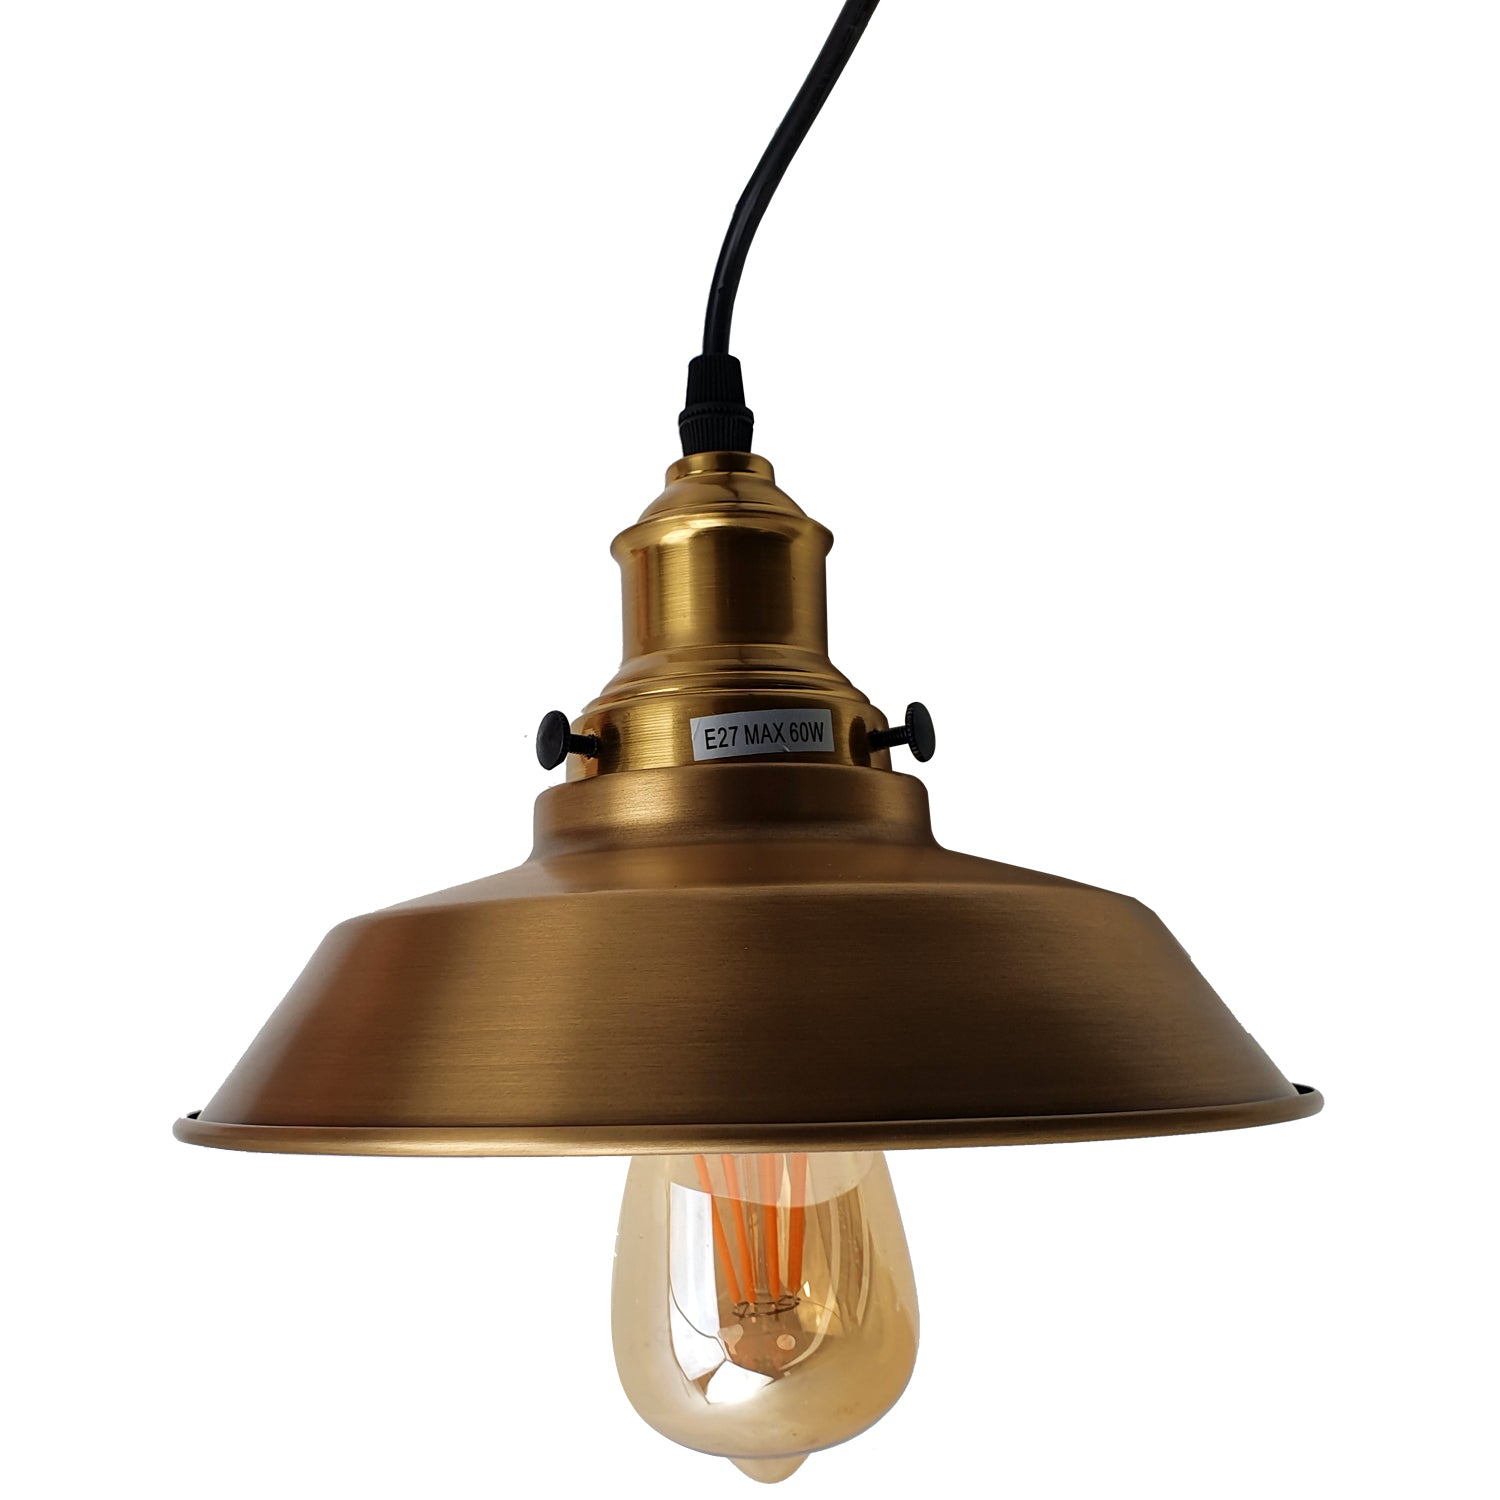 Vintage Industrial Metal Ceiling Pendant Lamp Yellow Brass Shade Modern Retro Style~2542 - LEDSone UK Ltd